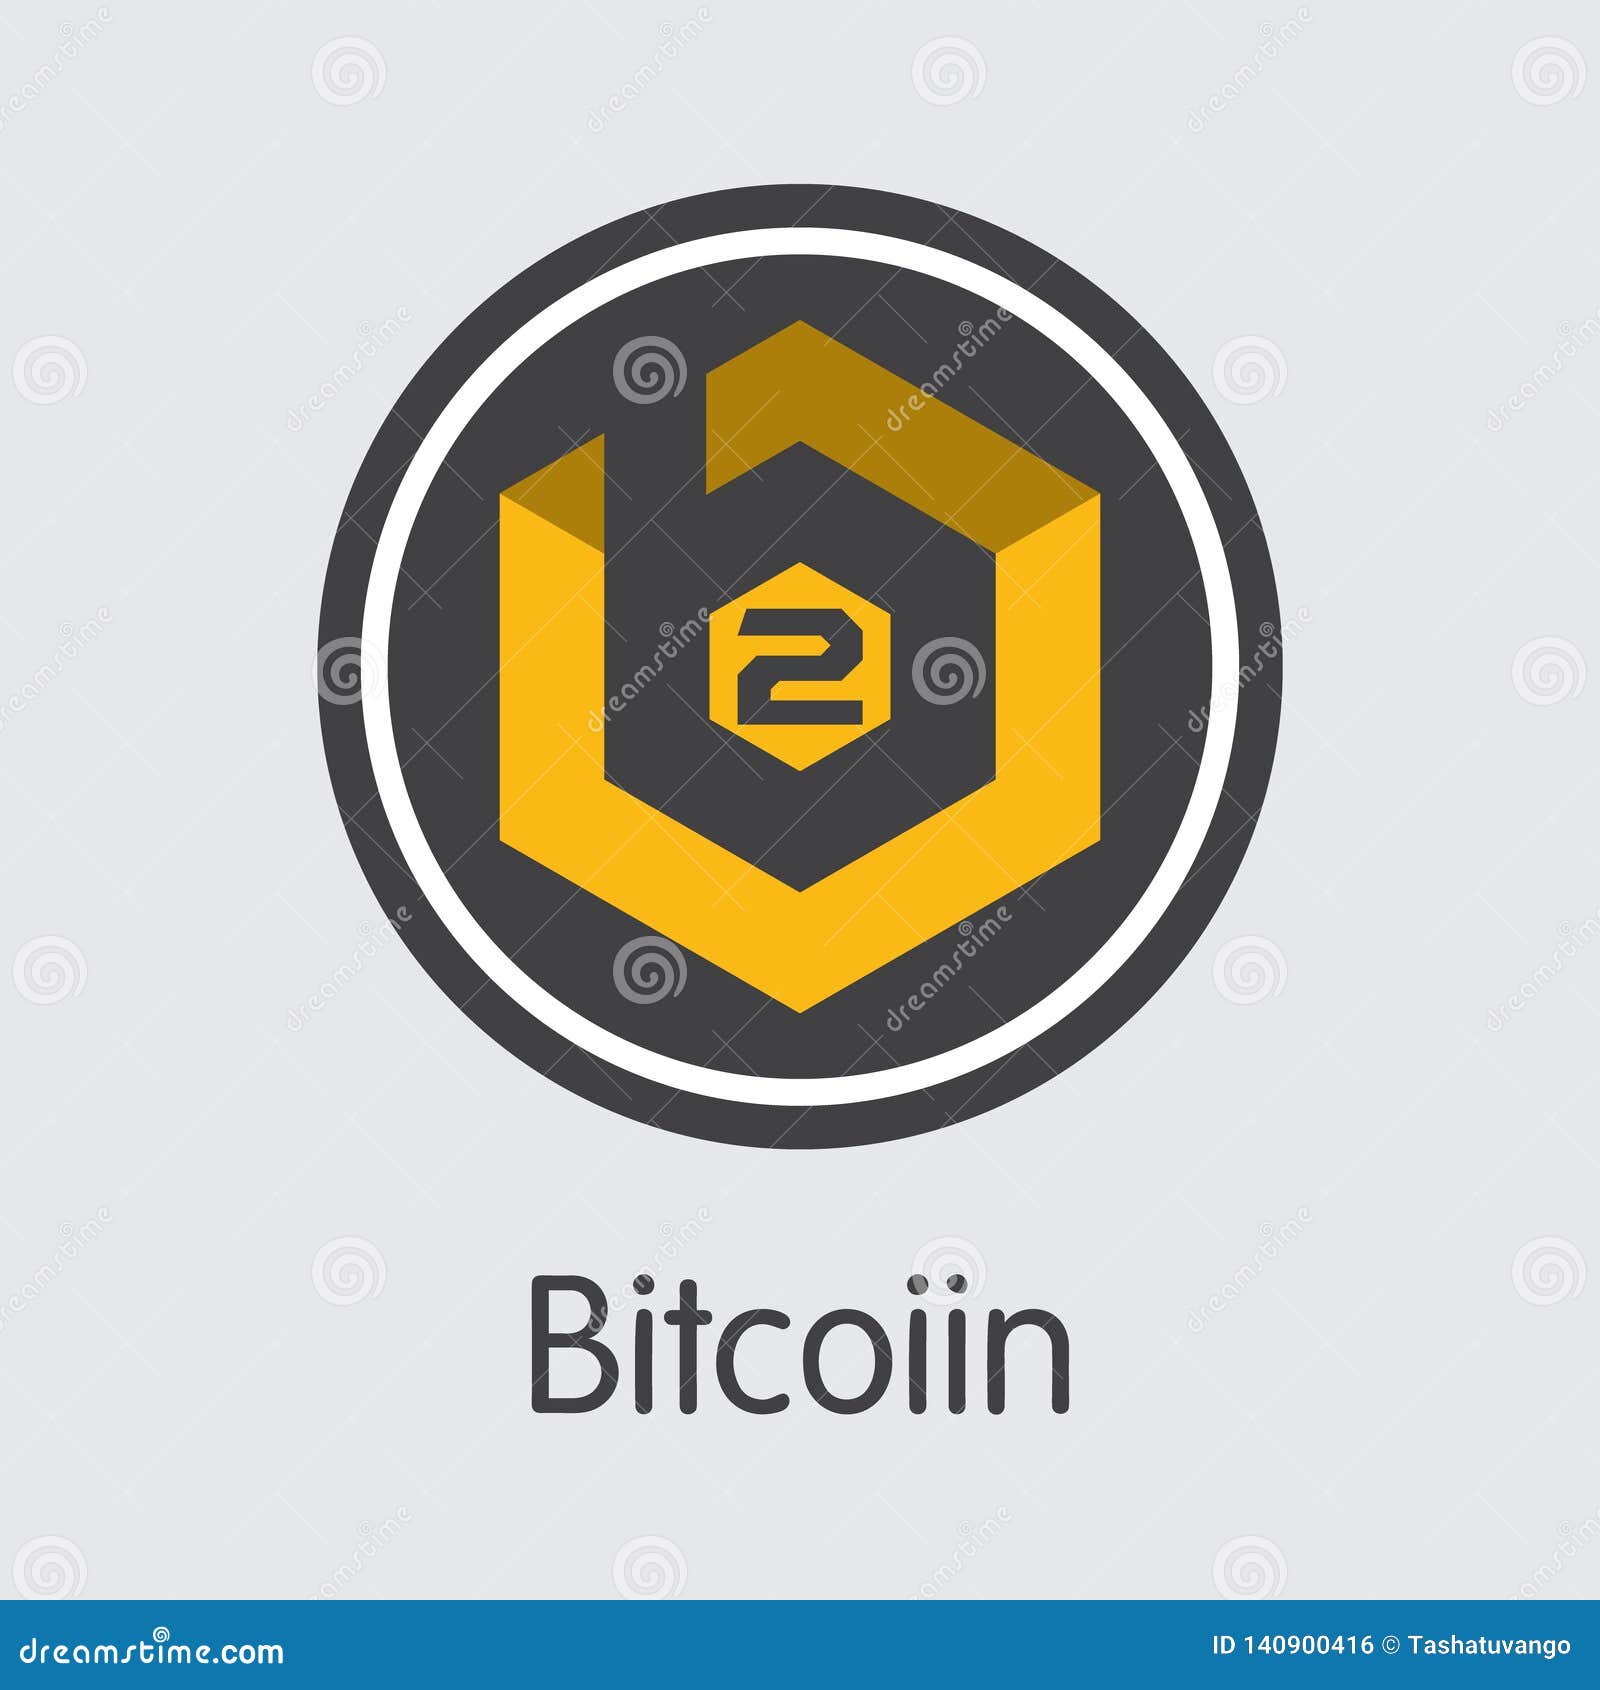 b2g - bitcoiin. the logo of money or market emblem.